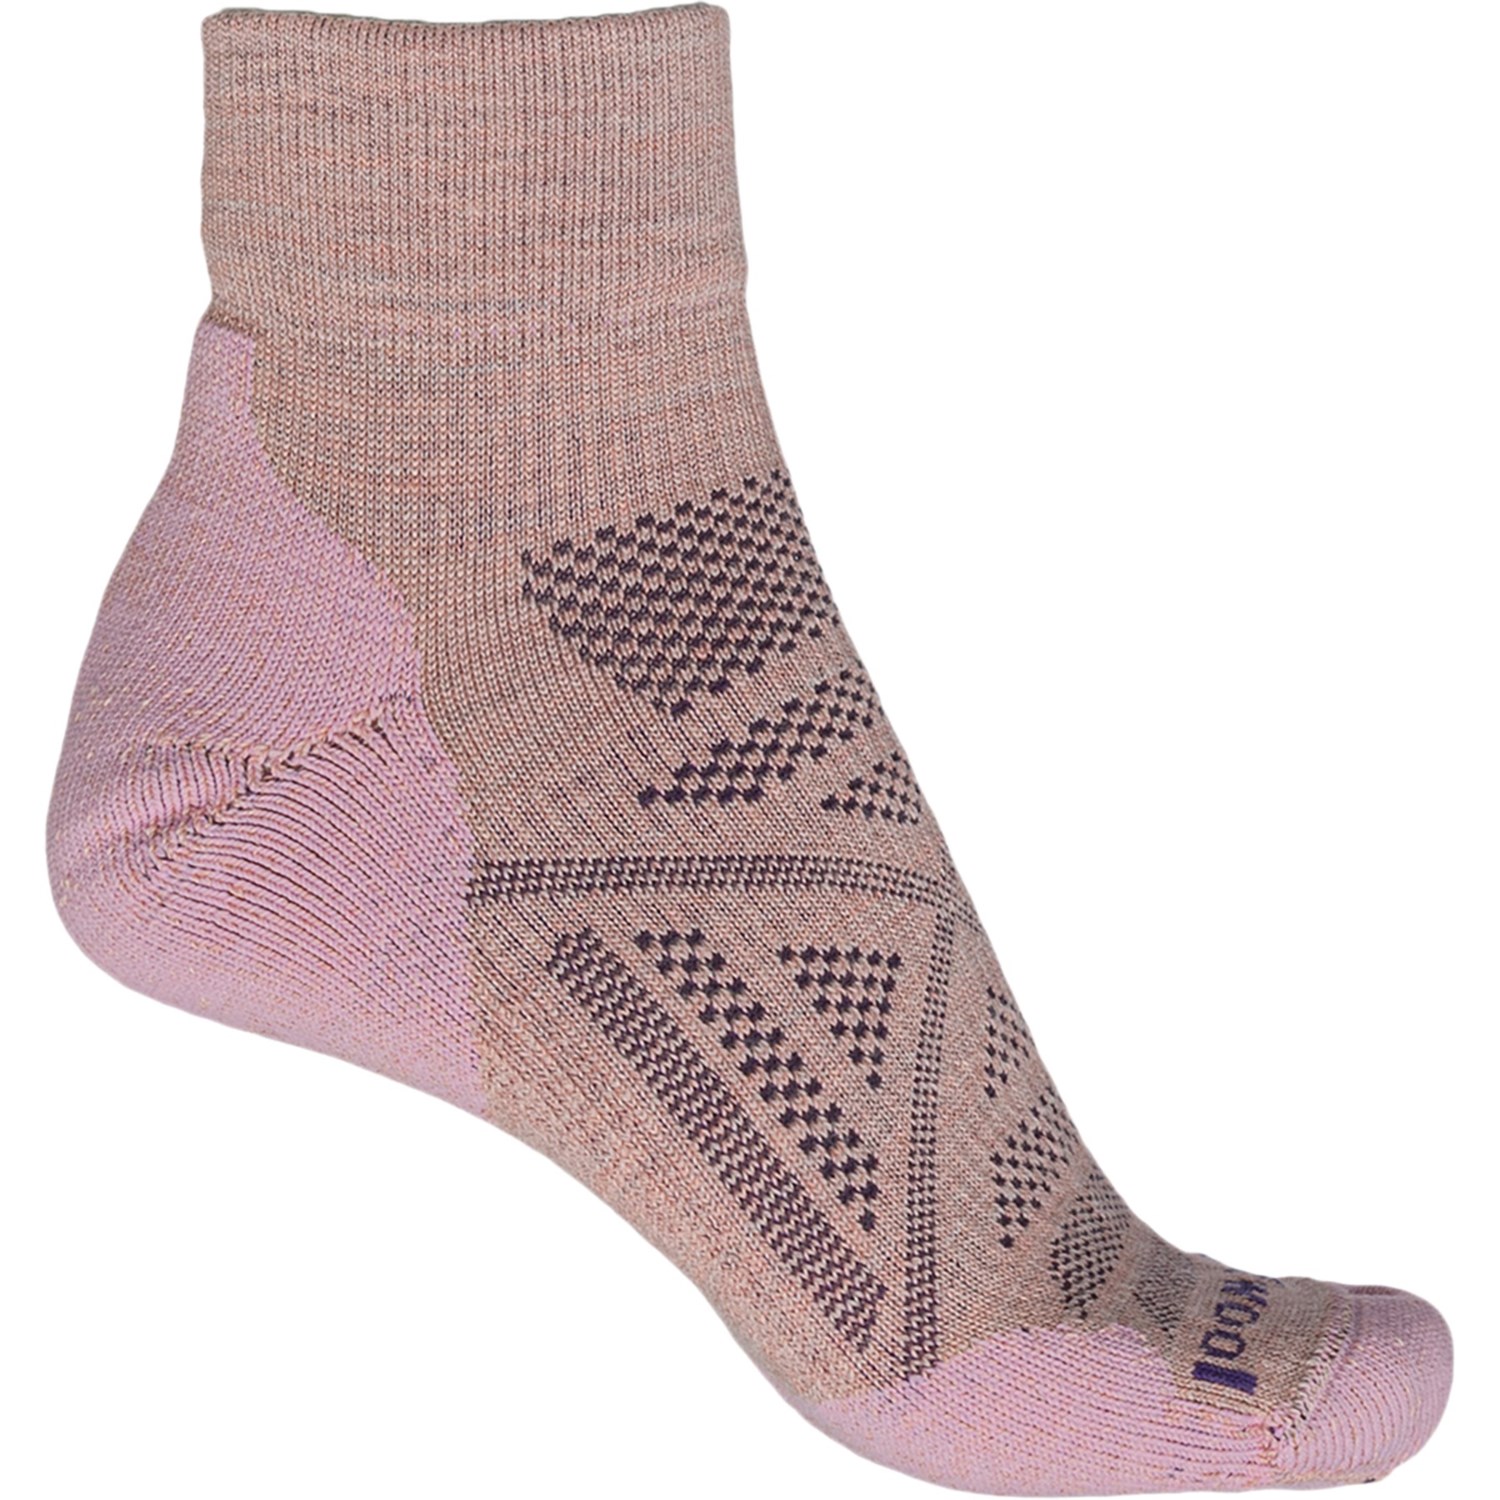 https://i.stpost.com/smartwool-phd-outdoor-lightweight-socks-merino-wool-ankle-for-women-in-mineral-pink~p~3vrgf_01~1500.3.jpg